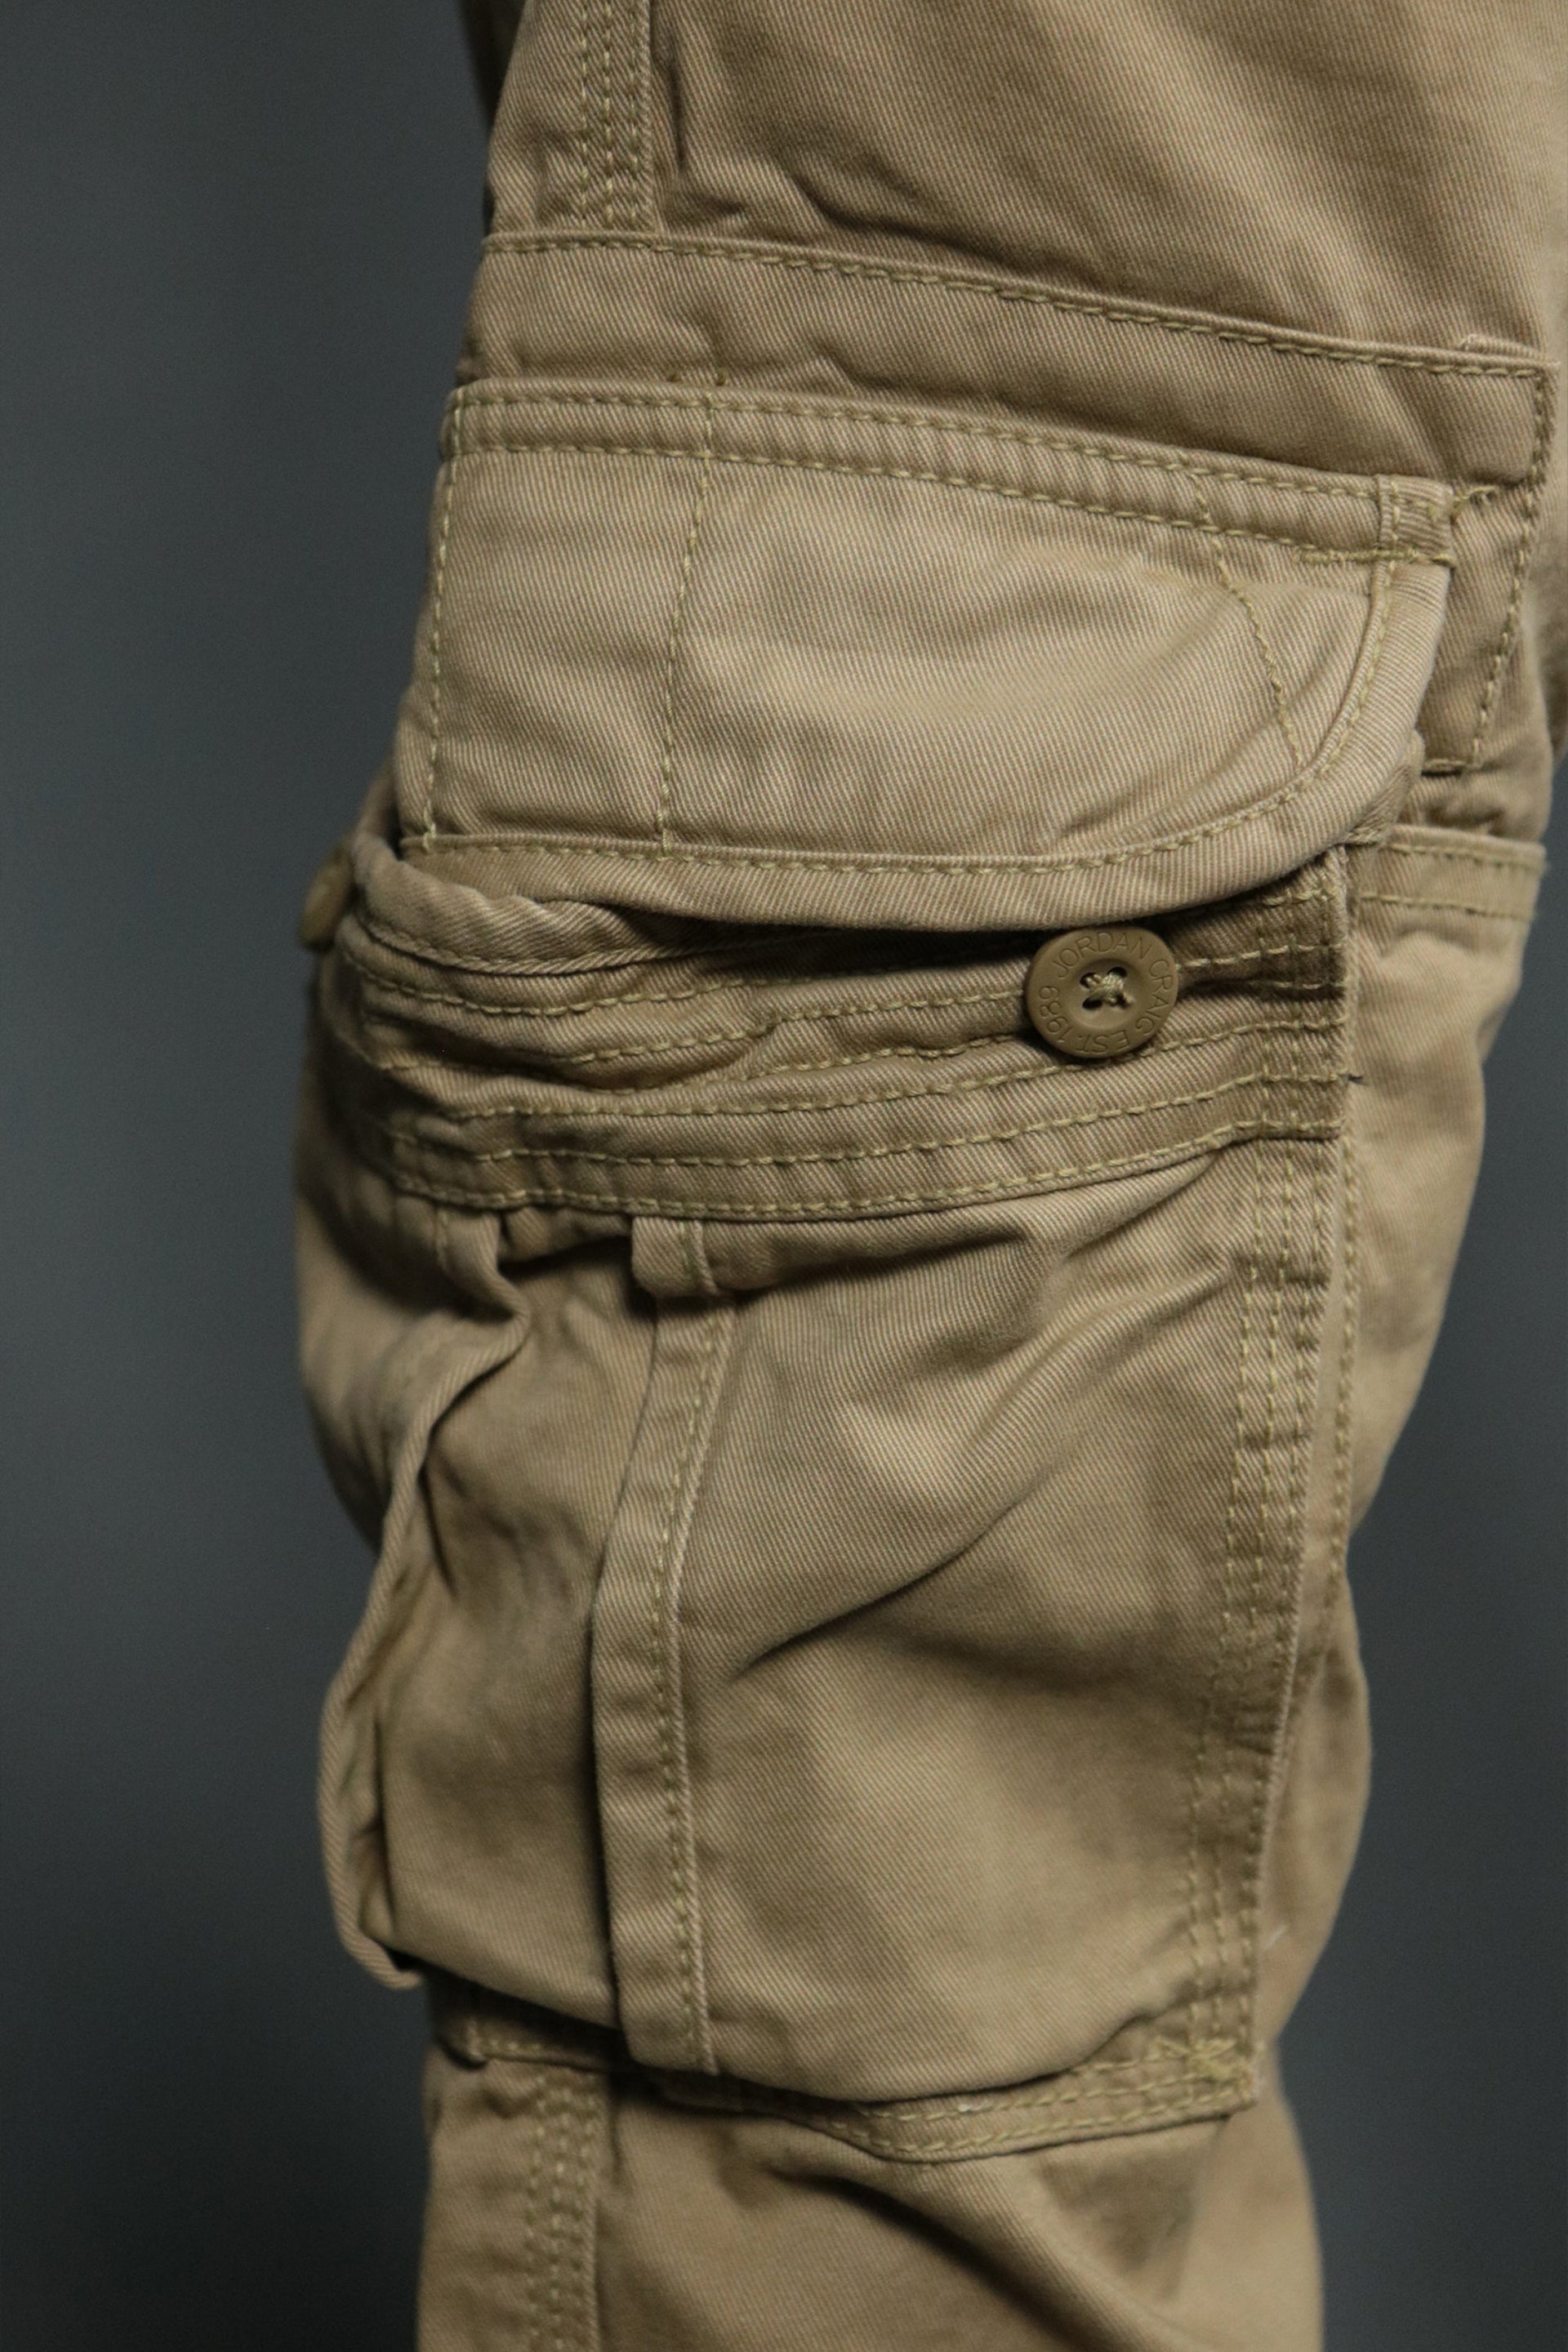 The buttonend pocket of the khaki men's utility pants by Jordan Craig.